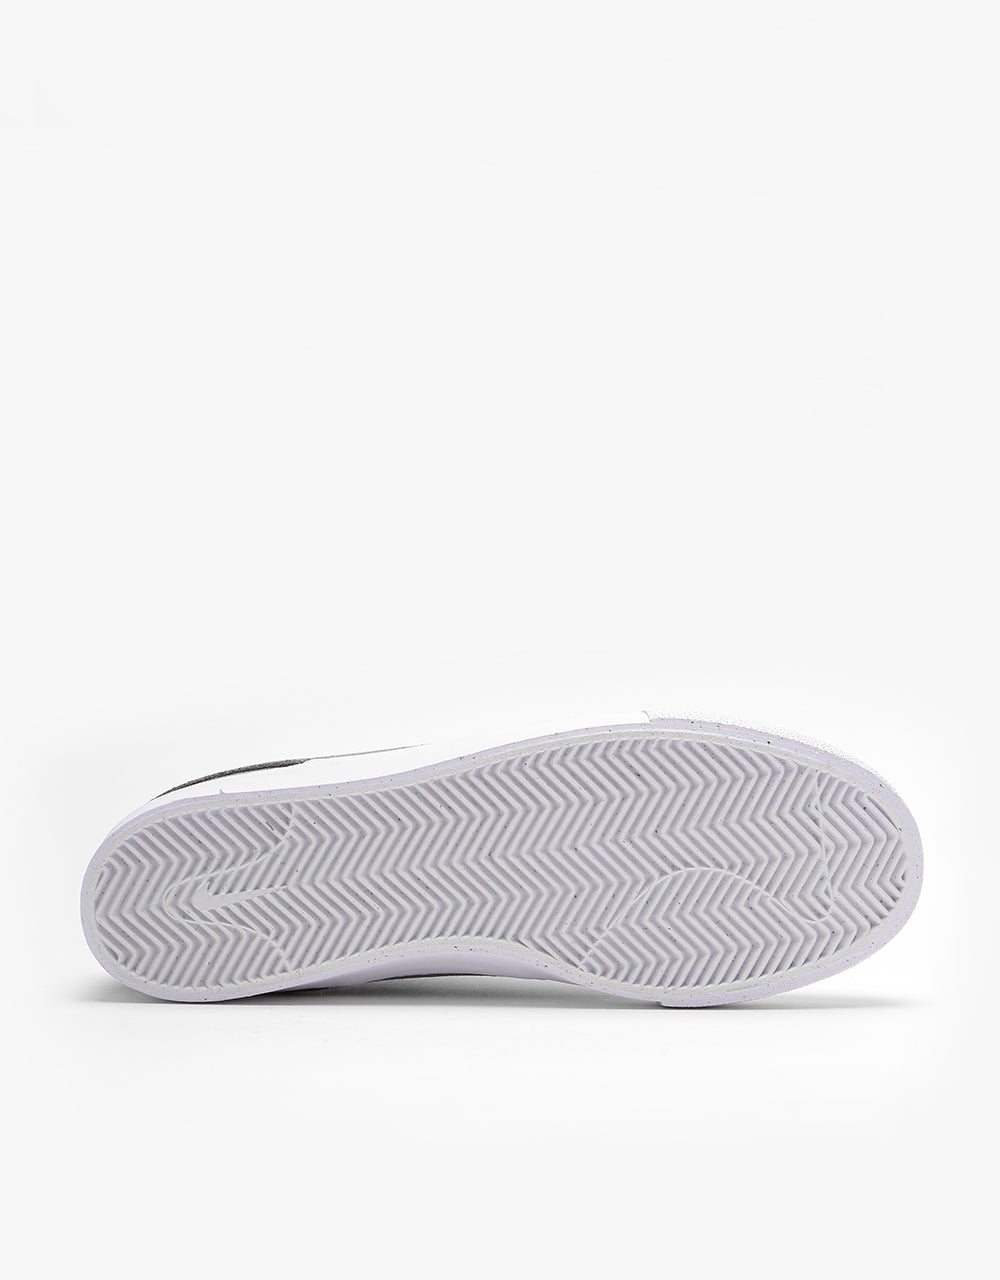 Nike SB Zoom Stefan Janoski FL RM Skate Shoes - Tumbled Grey/White ...